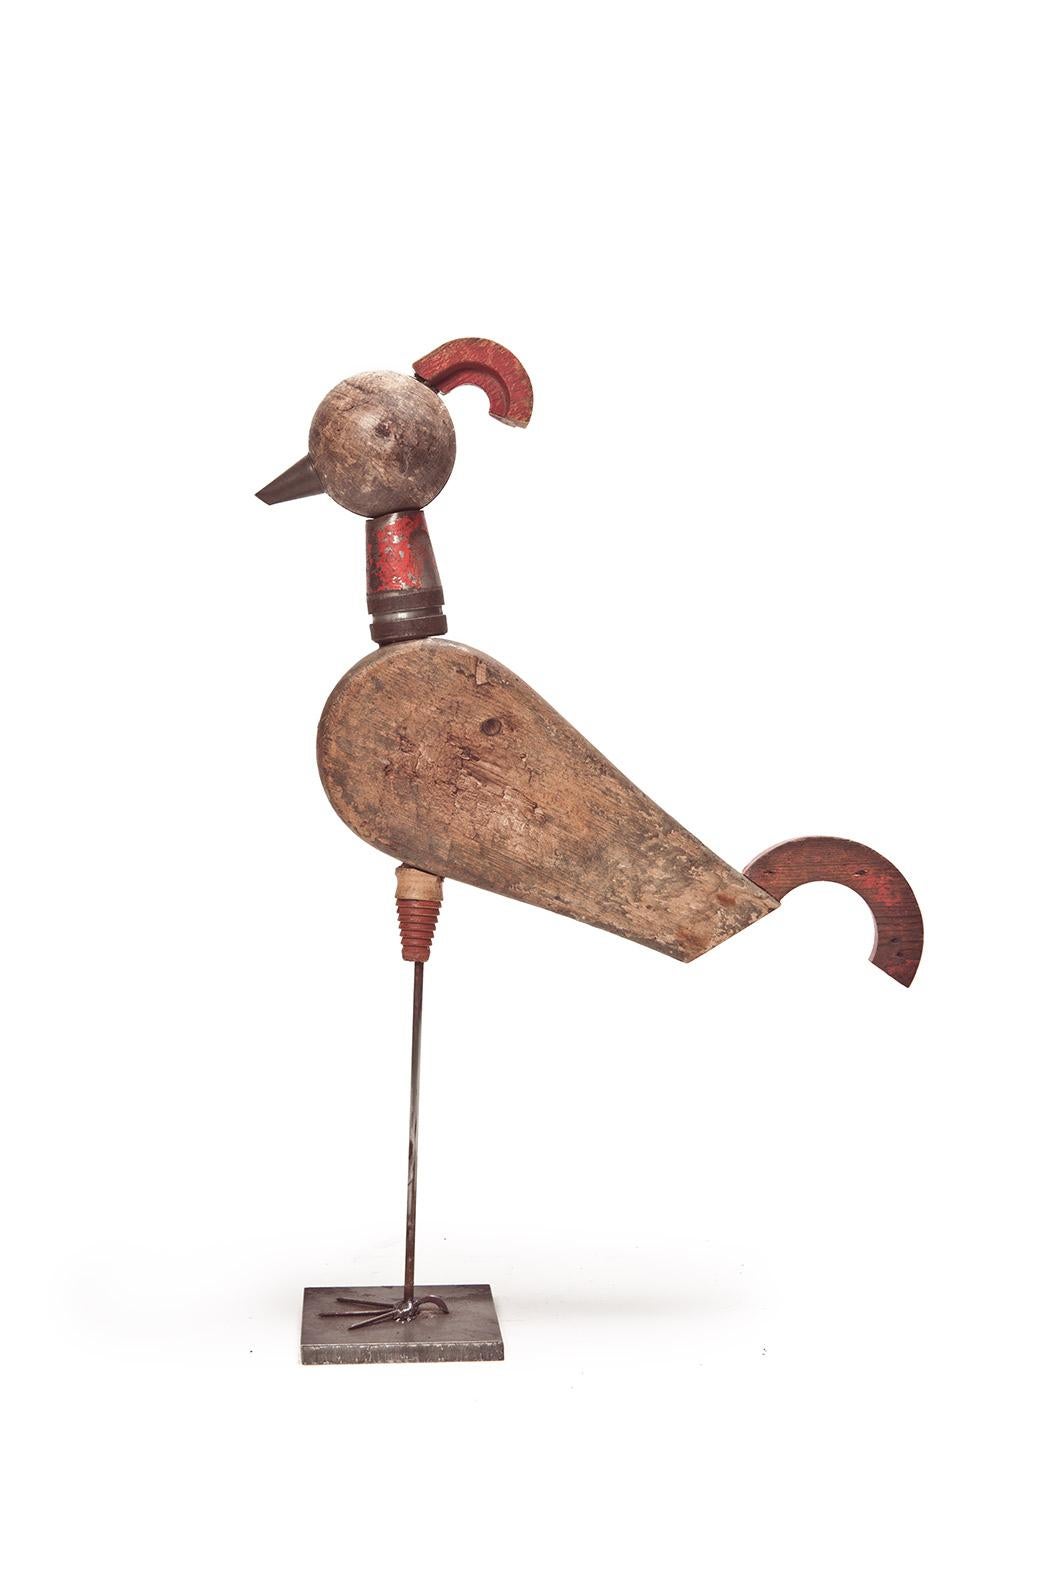 Miquel Aparici Figurative Sculpture - Pájaro - 21st Century, Contemporary Sculpture, Figurative, Recycled Objects